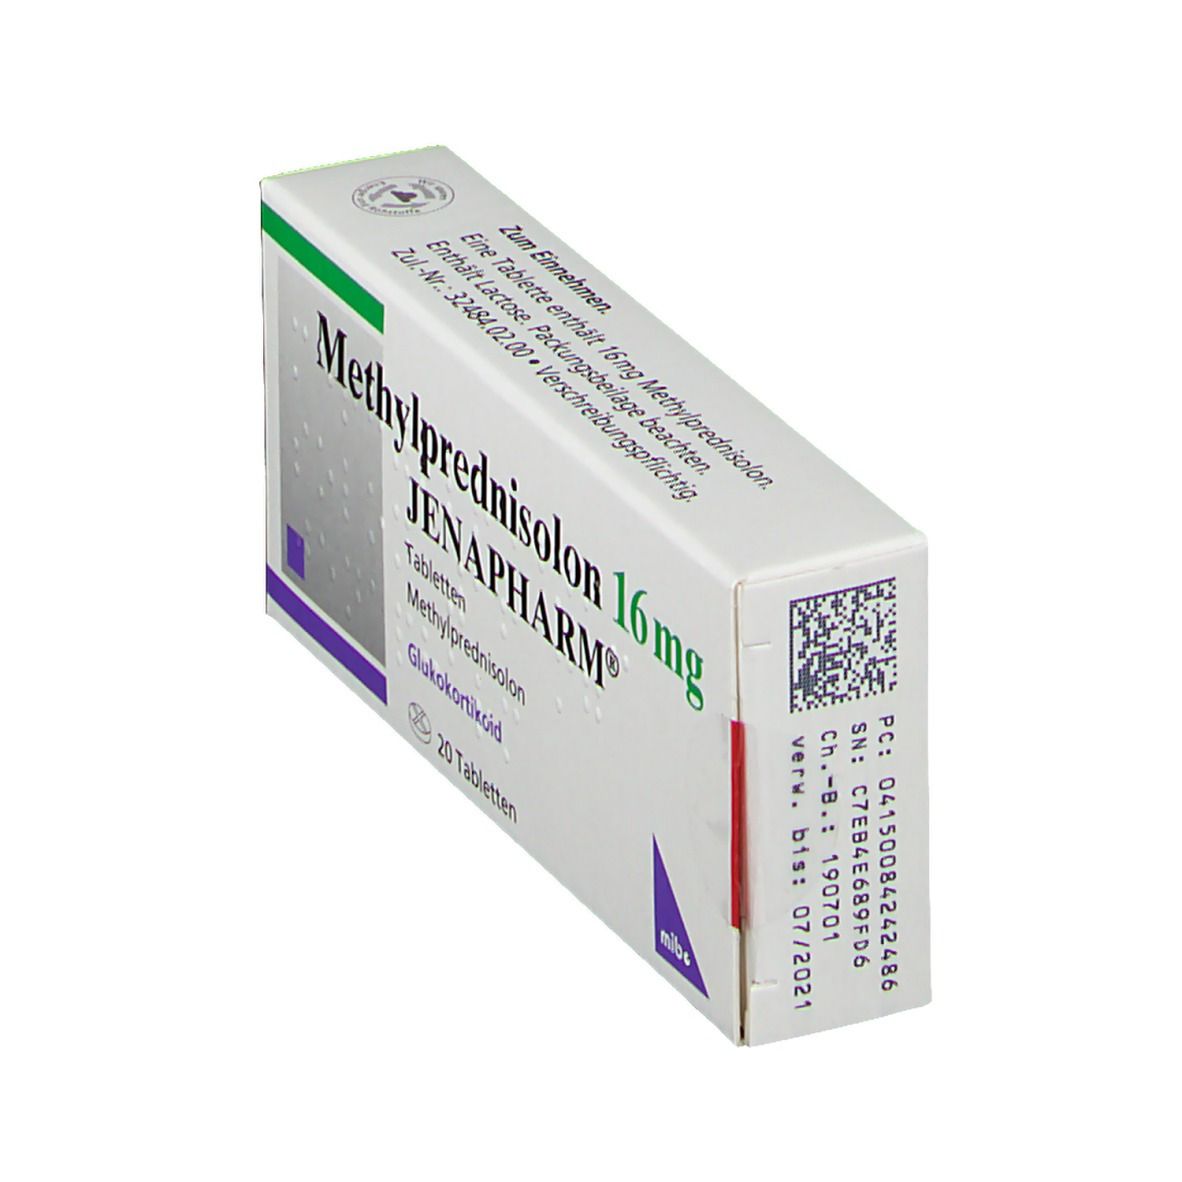 Methylprednisolon 16 mg JENAPHARM®